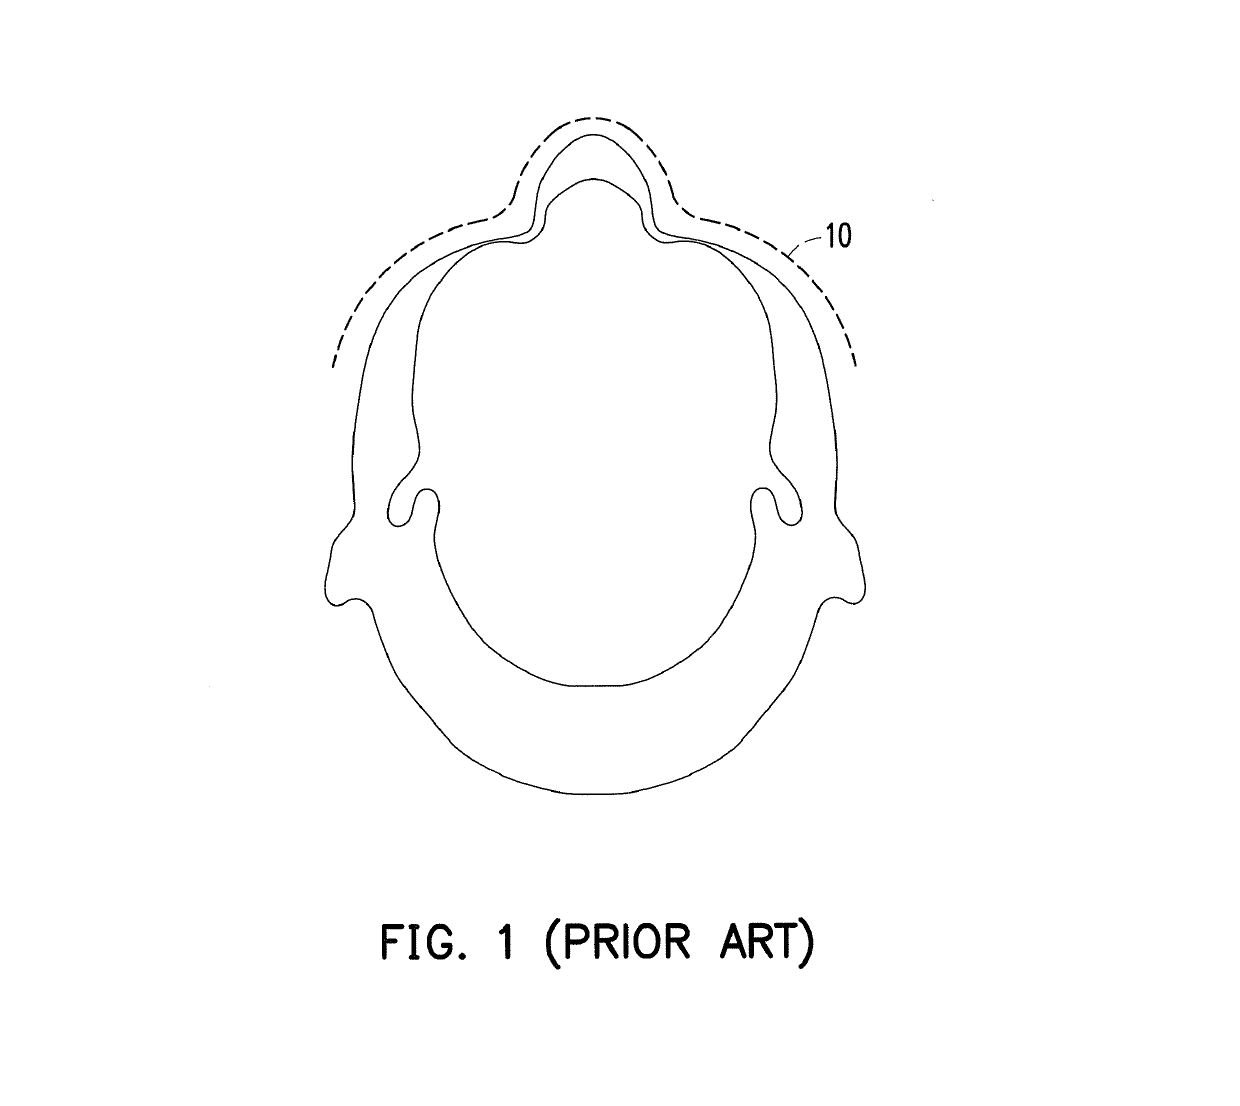 Head-mounted display device